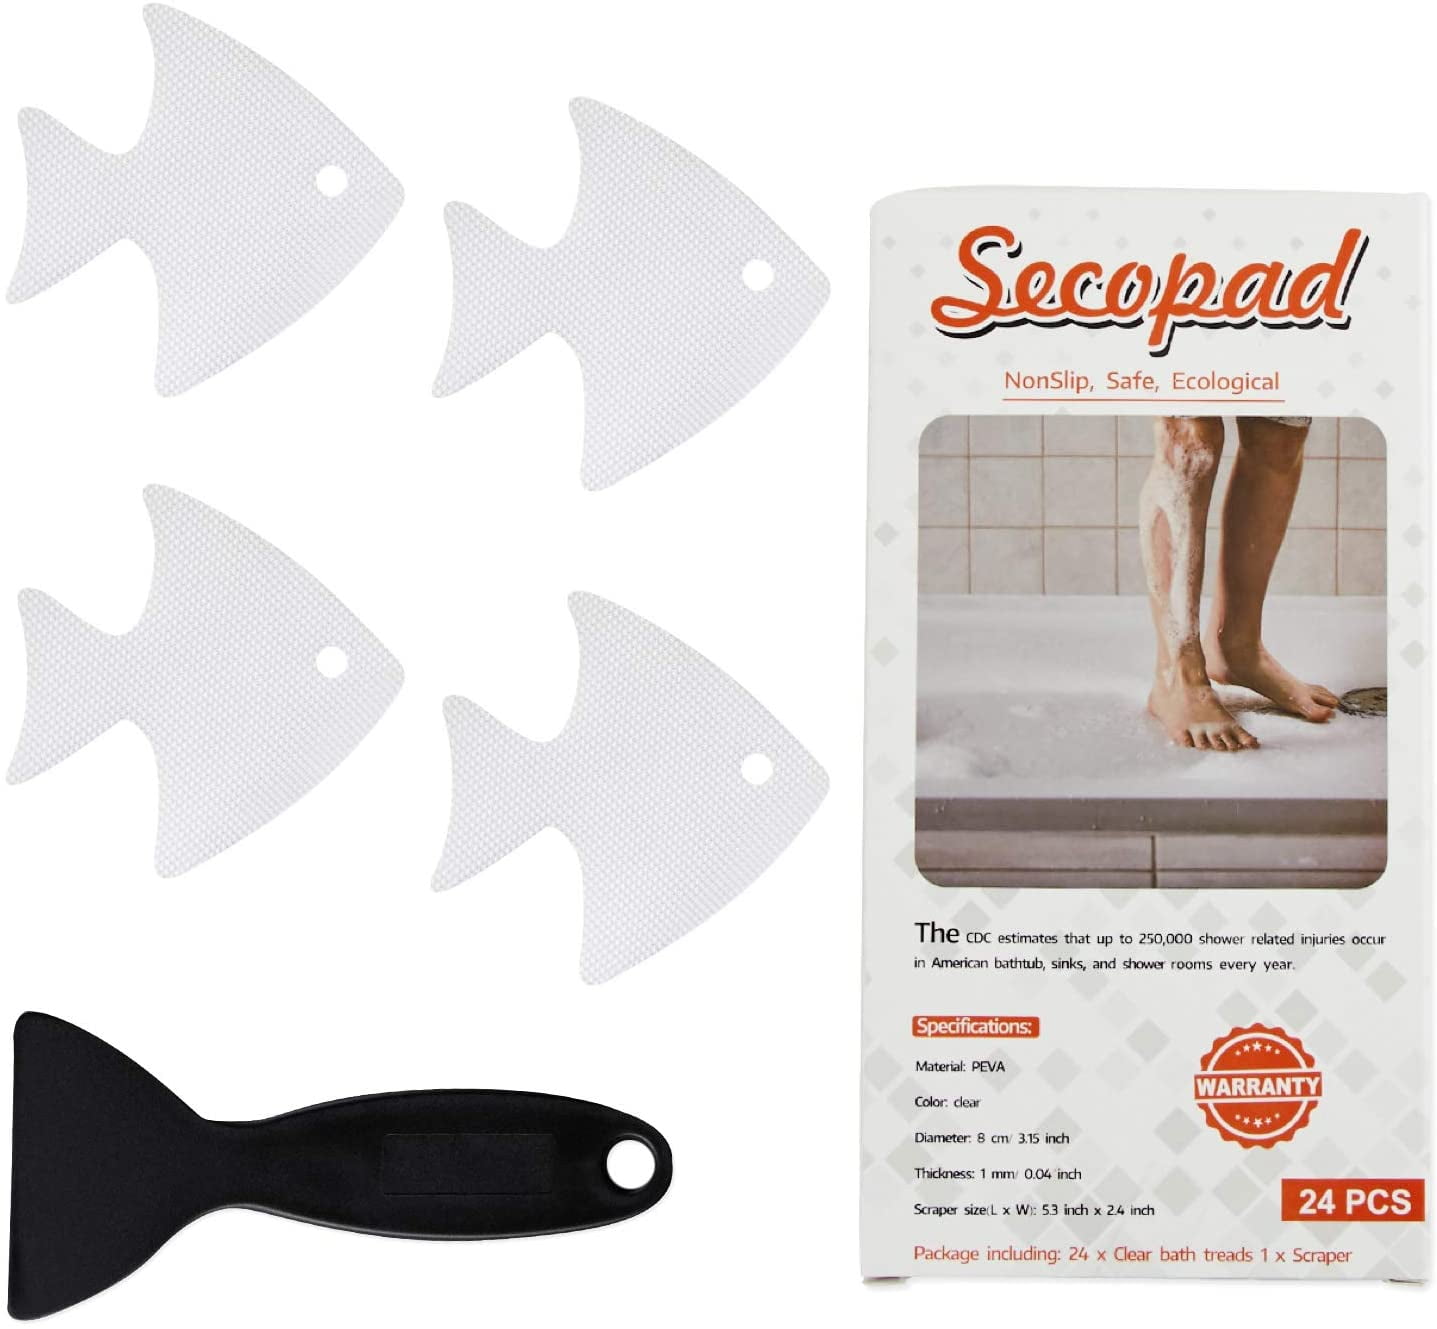 Details about   20Pcs 4 Inch Safety Non-Slip Applique Sticker Floor Treads Bath Tub&Shower Decal 